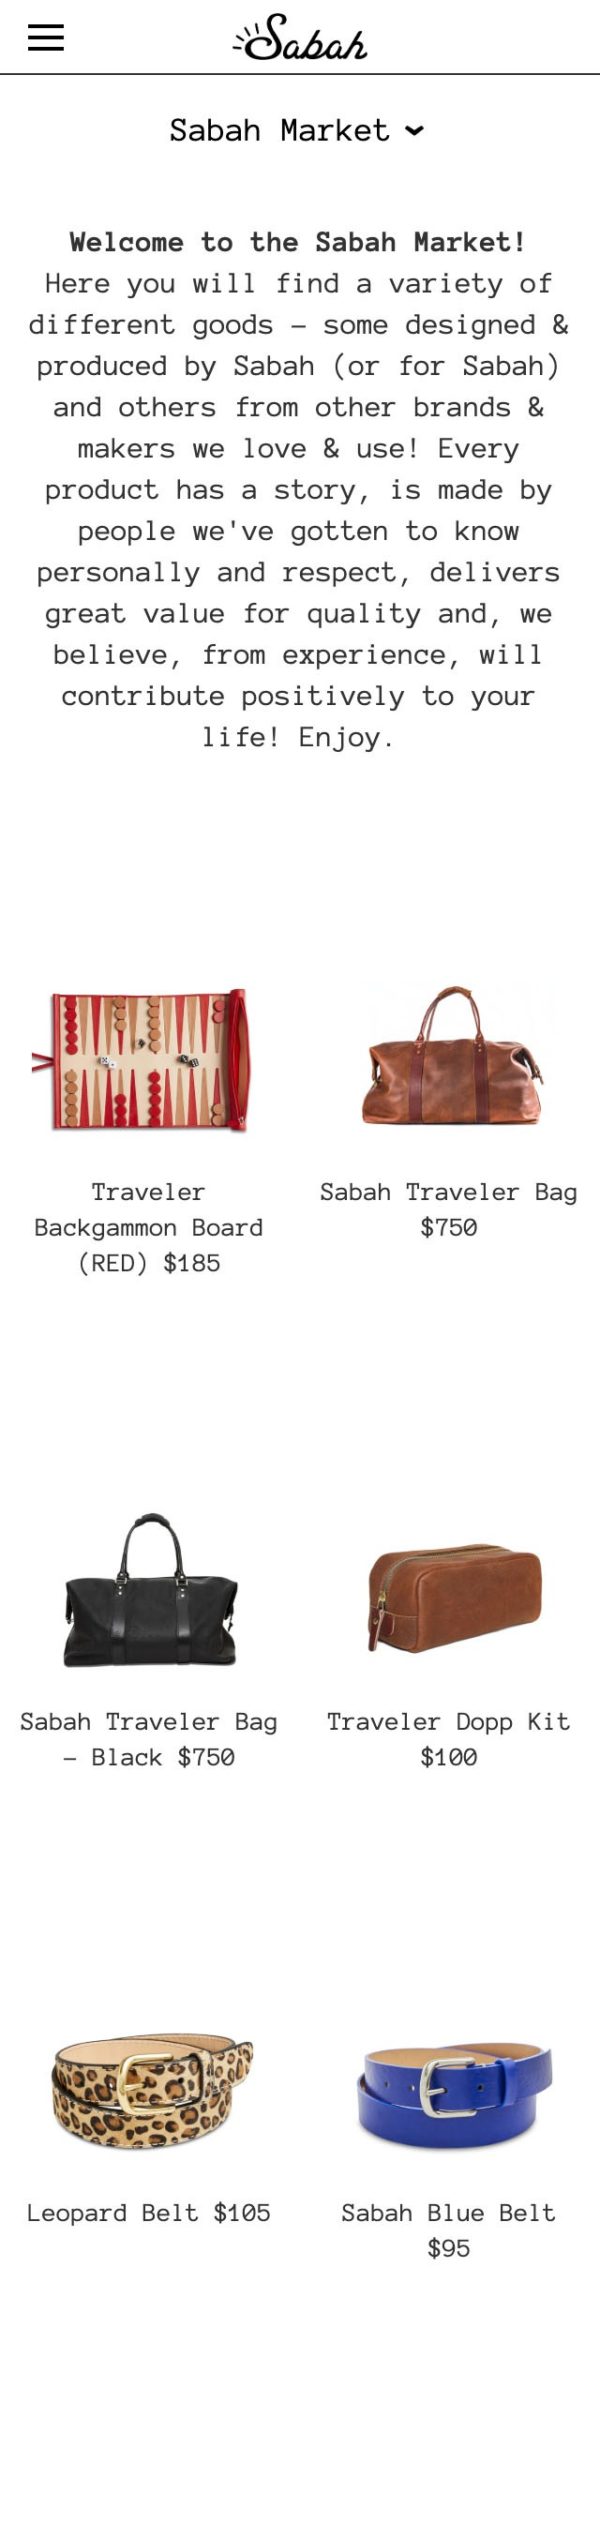 Screenshot of the Sabah website's Market page